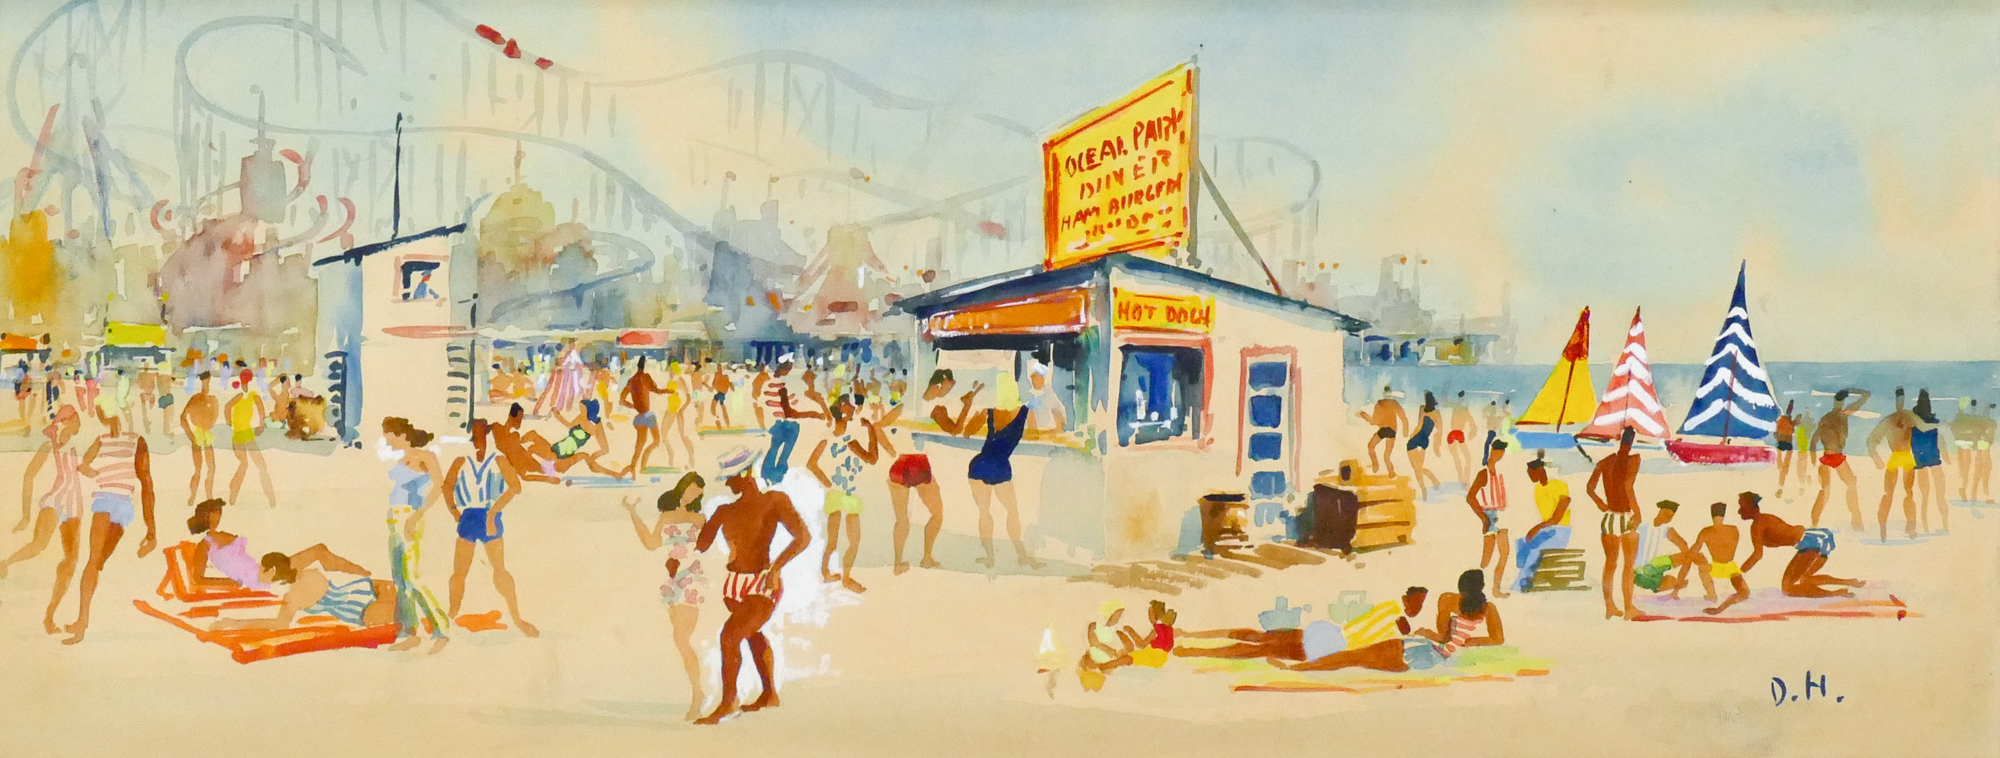 Ocean Park Diner Watercolor Painting